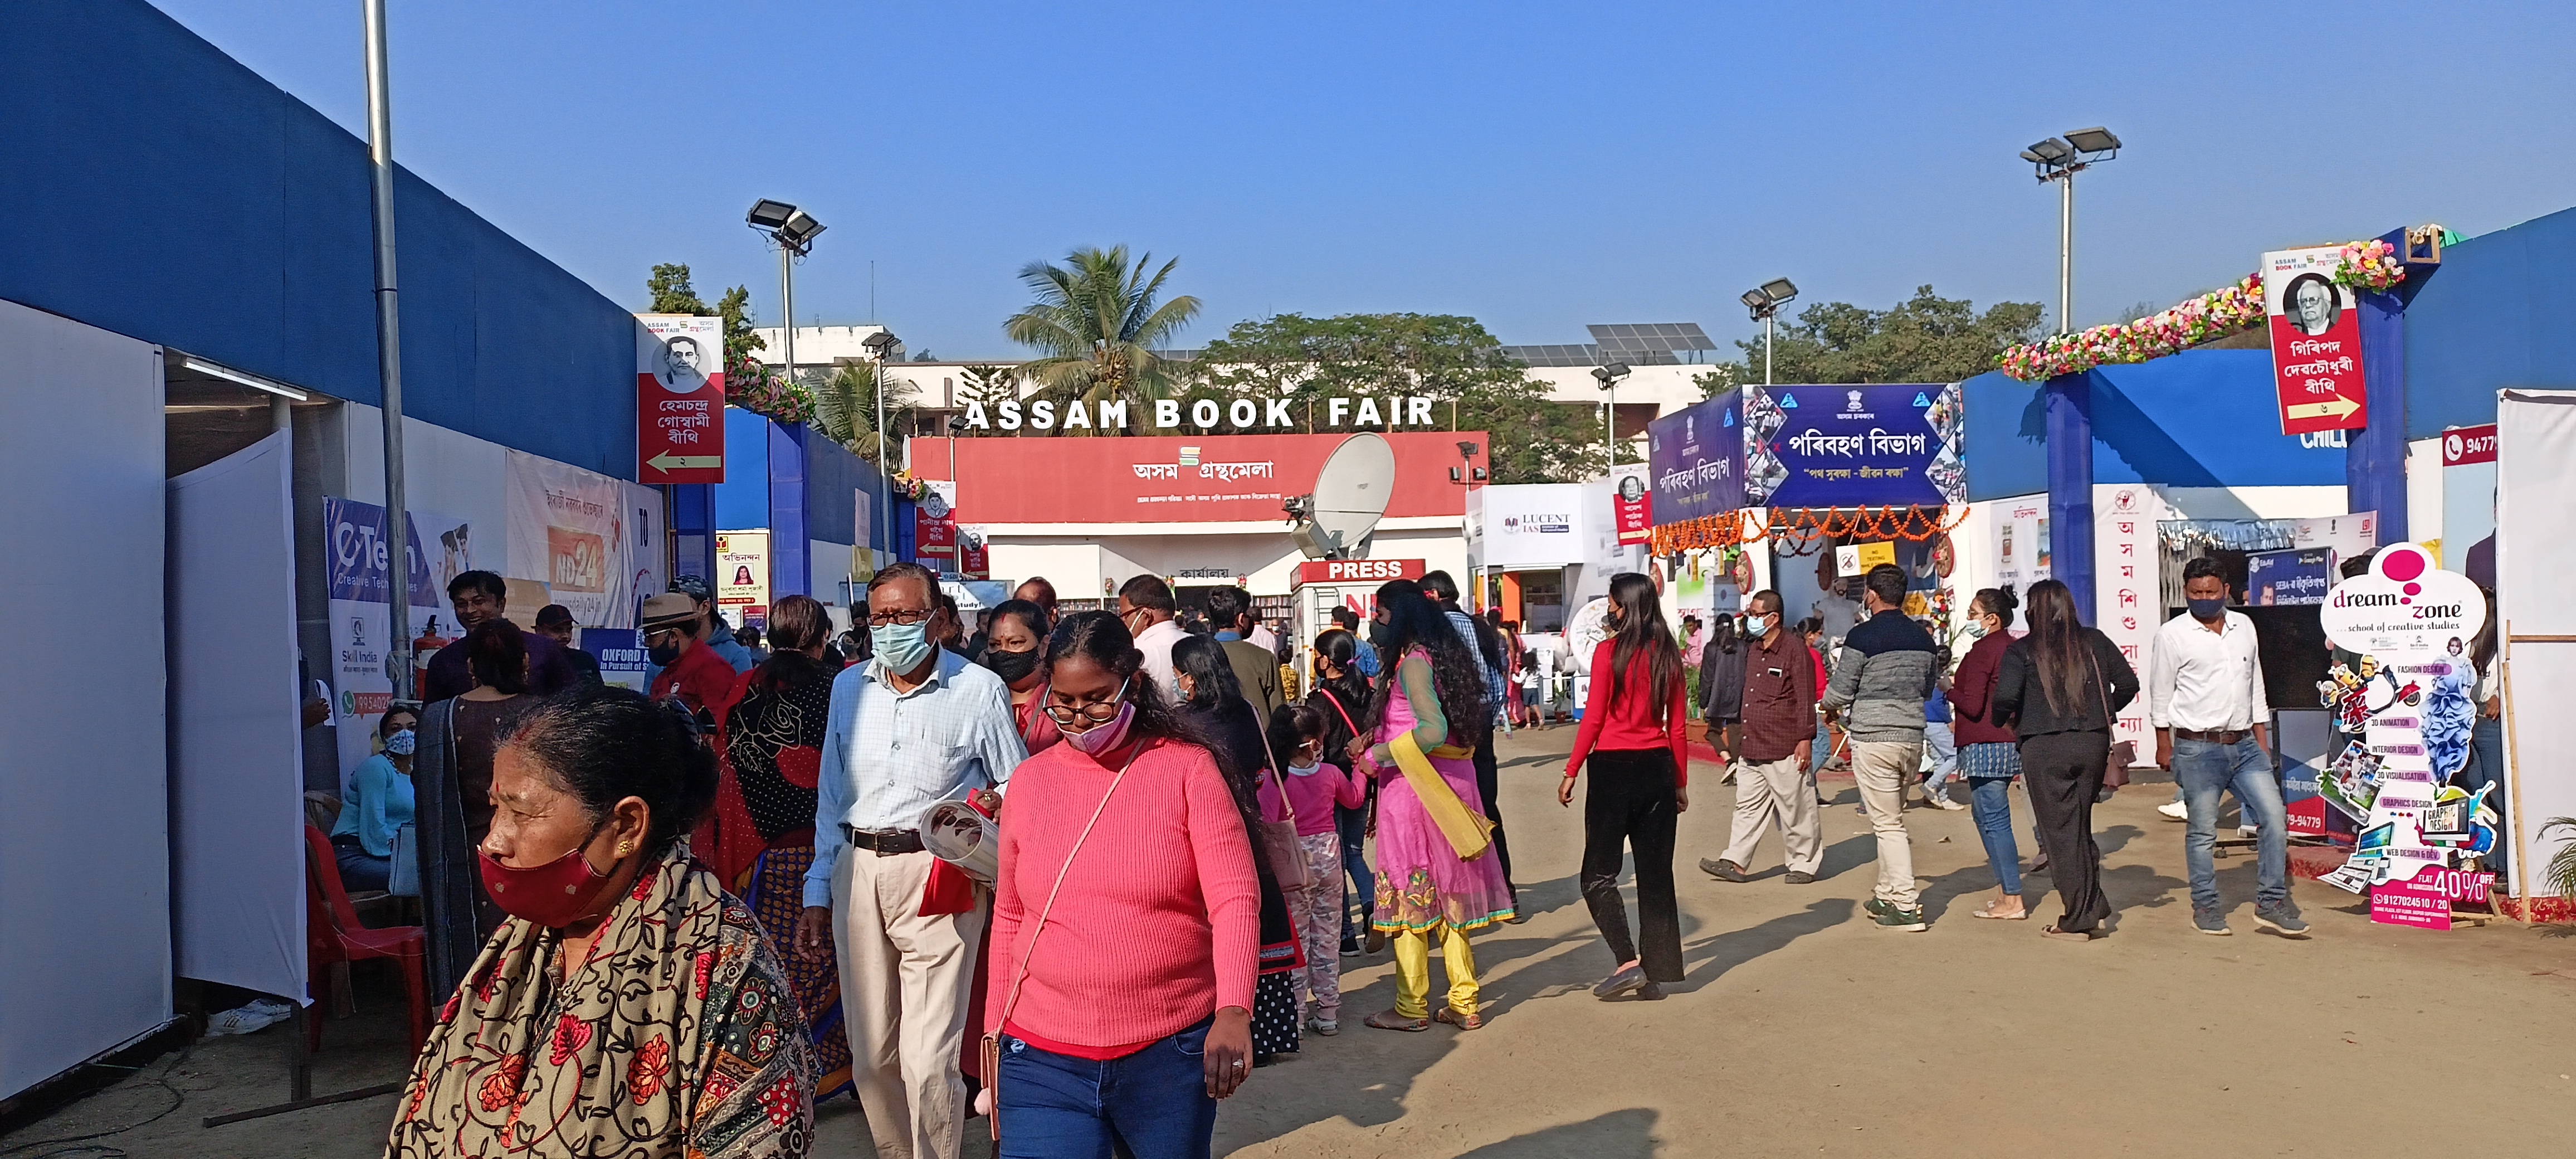 one crore rupees books sold out in 4 days in assam book fair Guwahati